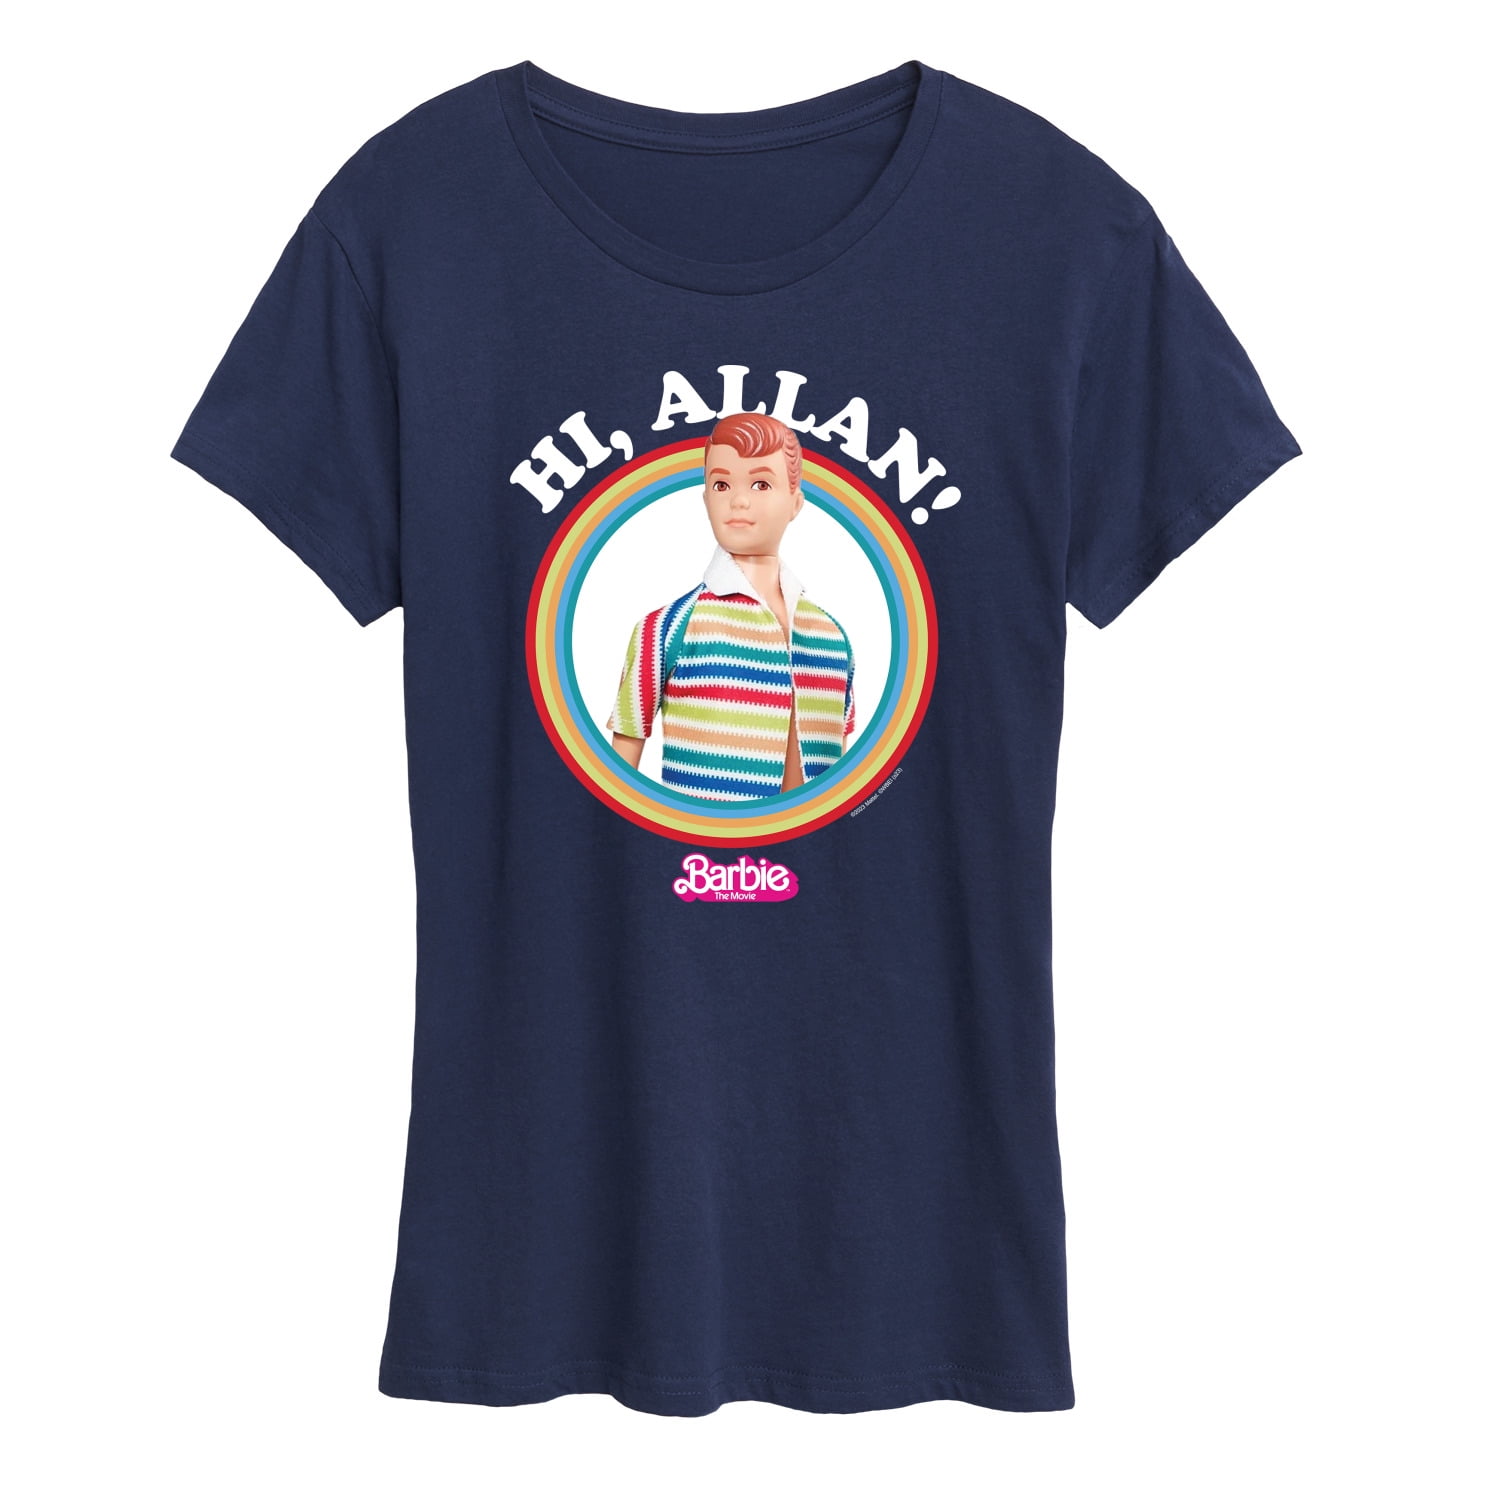 Barbie The Movie - Hi Allan - Women's Short Sleeve Graphic T-Shirt, Size: 2XL, Black